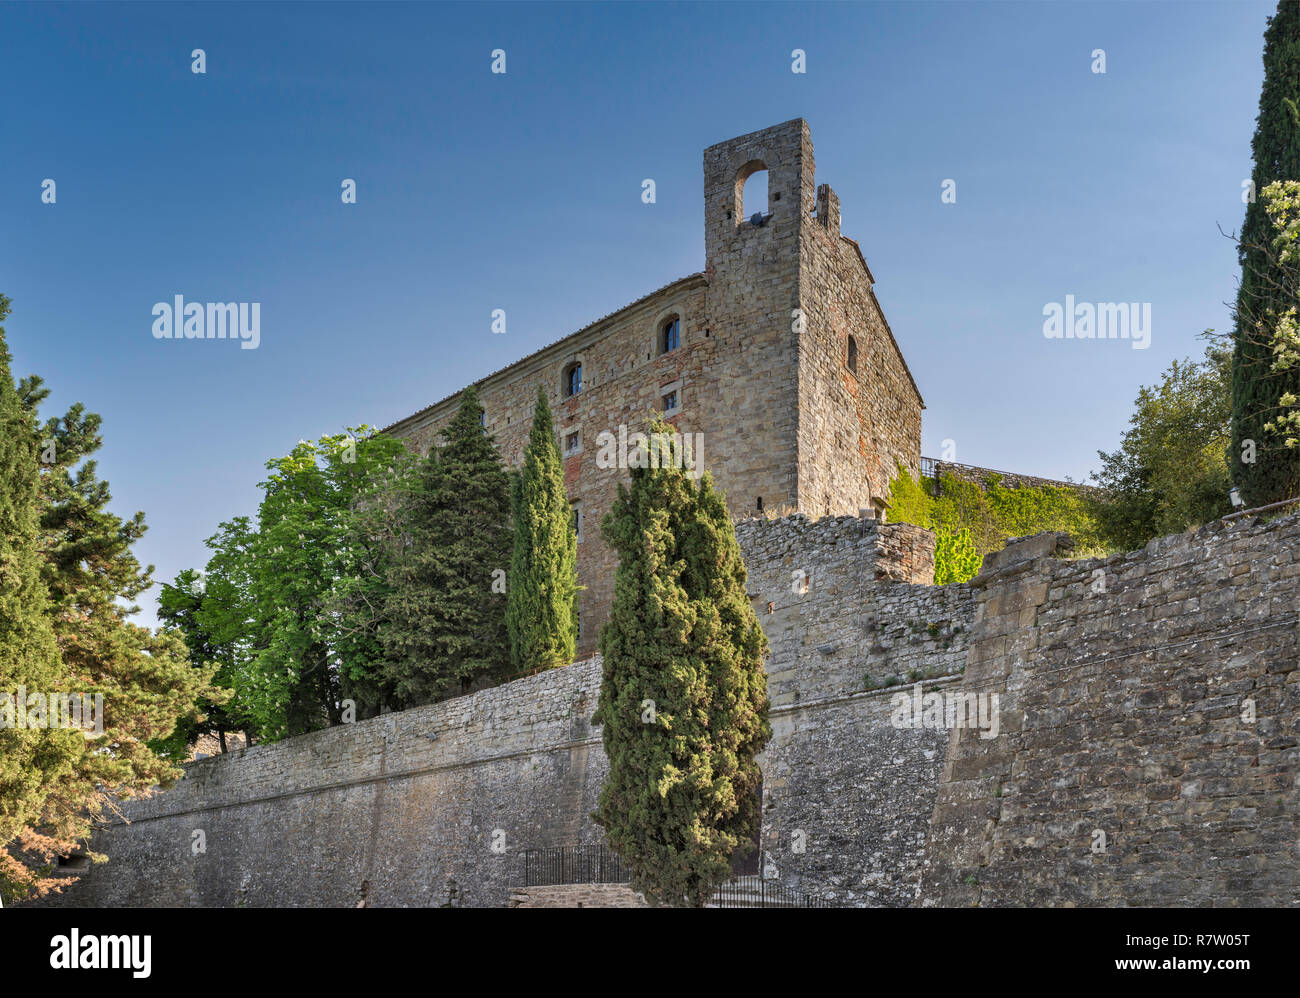 Fortezza del Girifalco, 16th century Medici fortress in Cortona, Tuscany, Italy Stock Photo